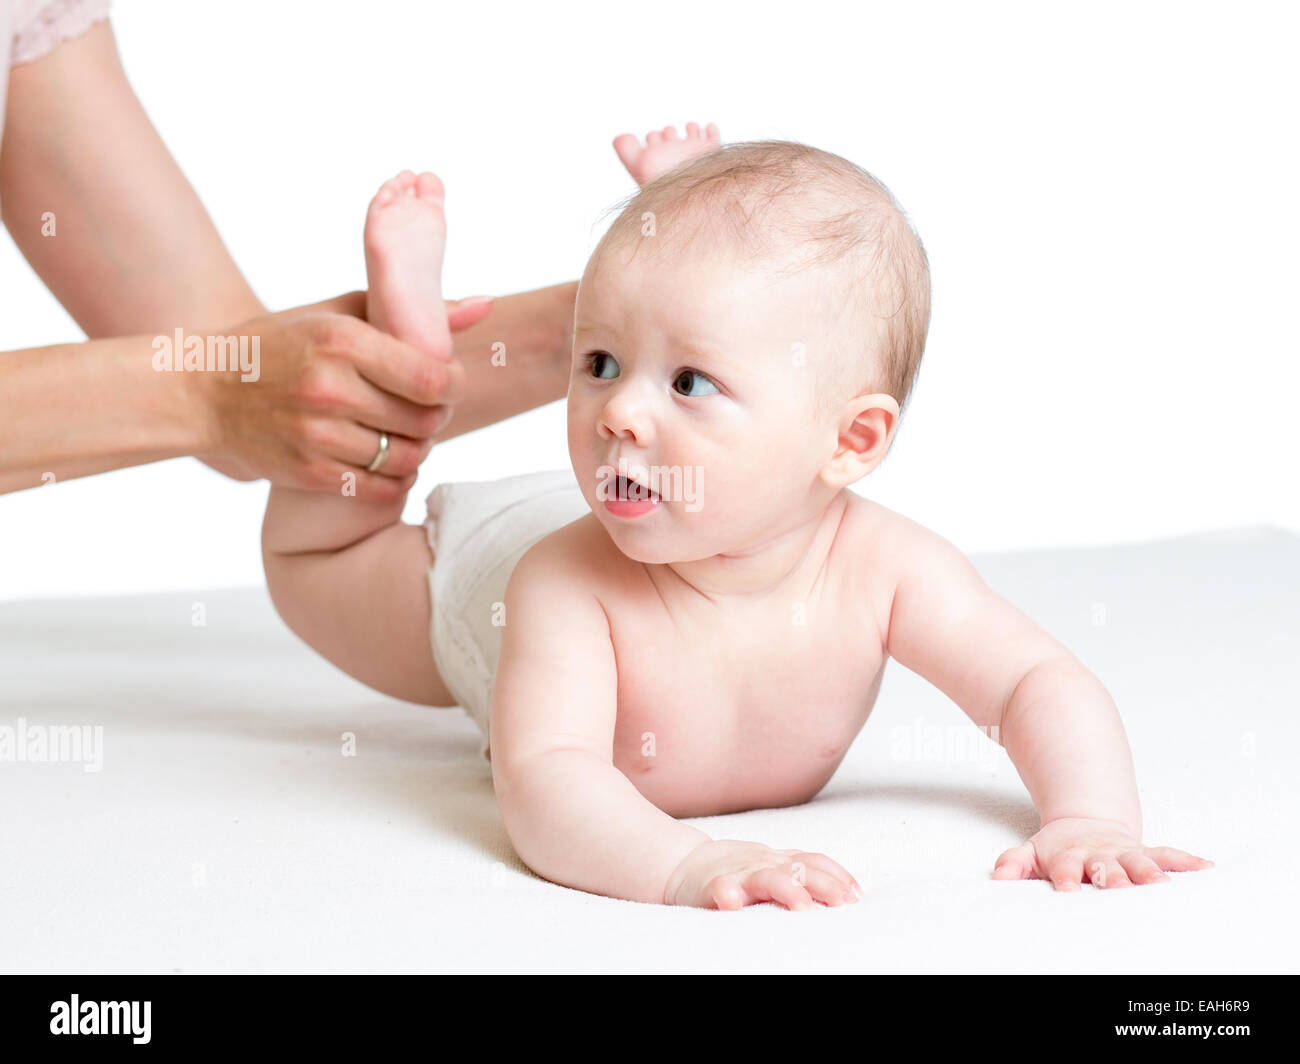 Baby massage. Mother massaging kid's legs Stock Photo